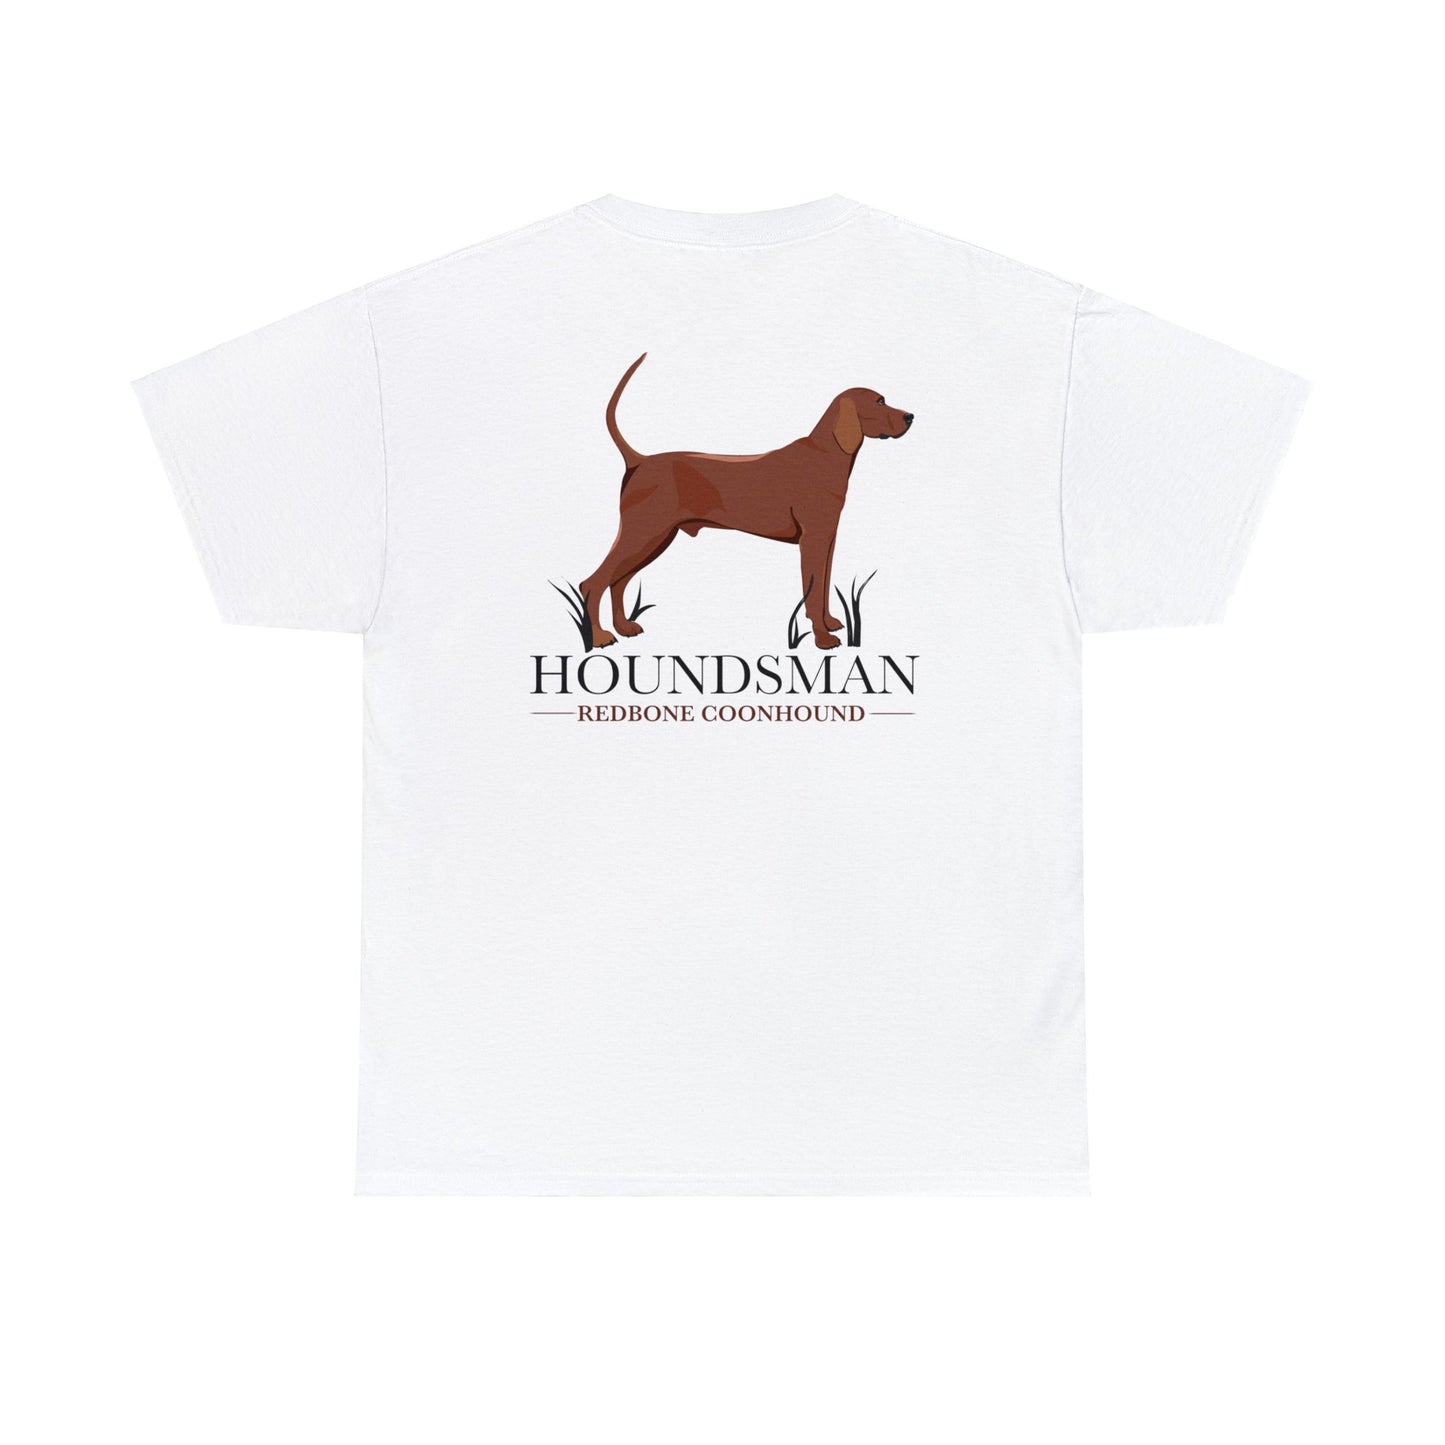 Redbone Coonhound tee